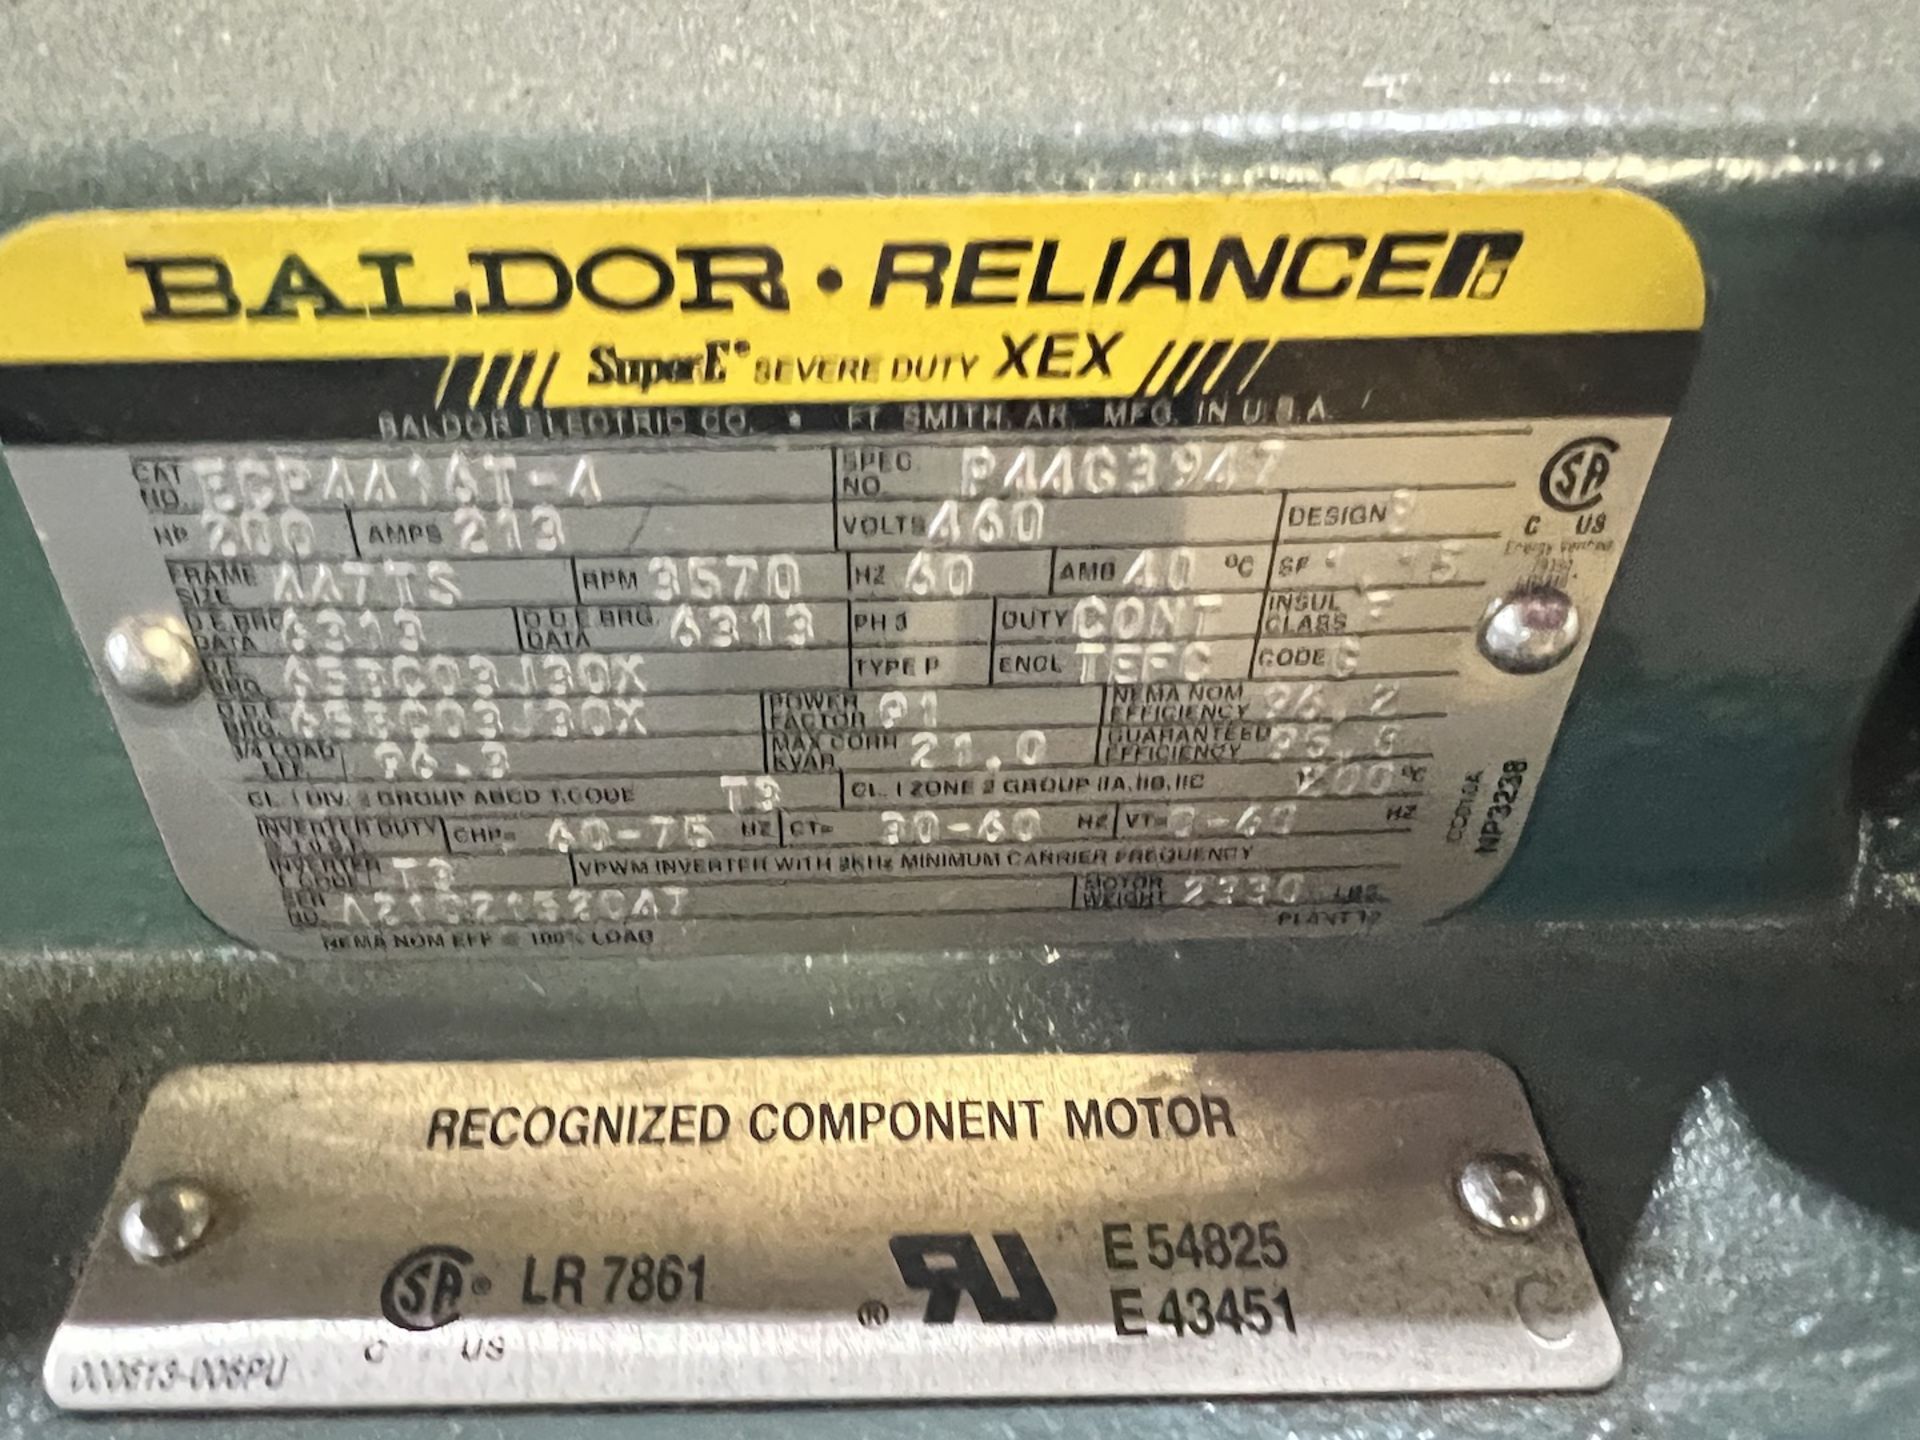 BALDOR RELIANCE 200-HP MOTOR, 3570 RPM, 460 V (SIMPLE LOADING FEE $110) - Image 6 of 9